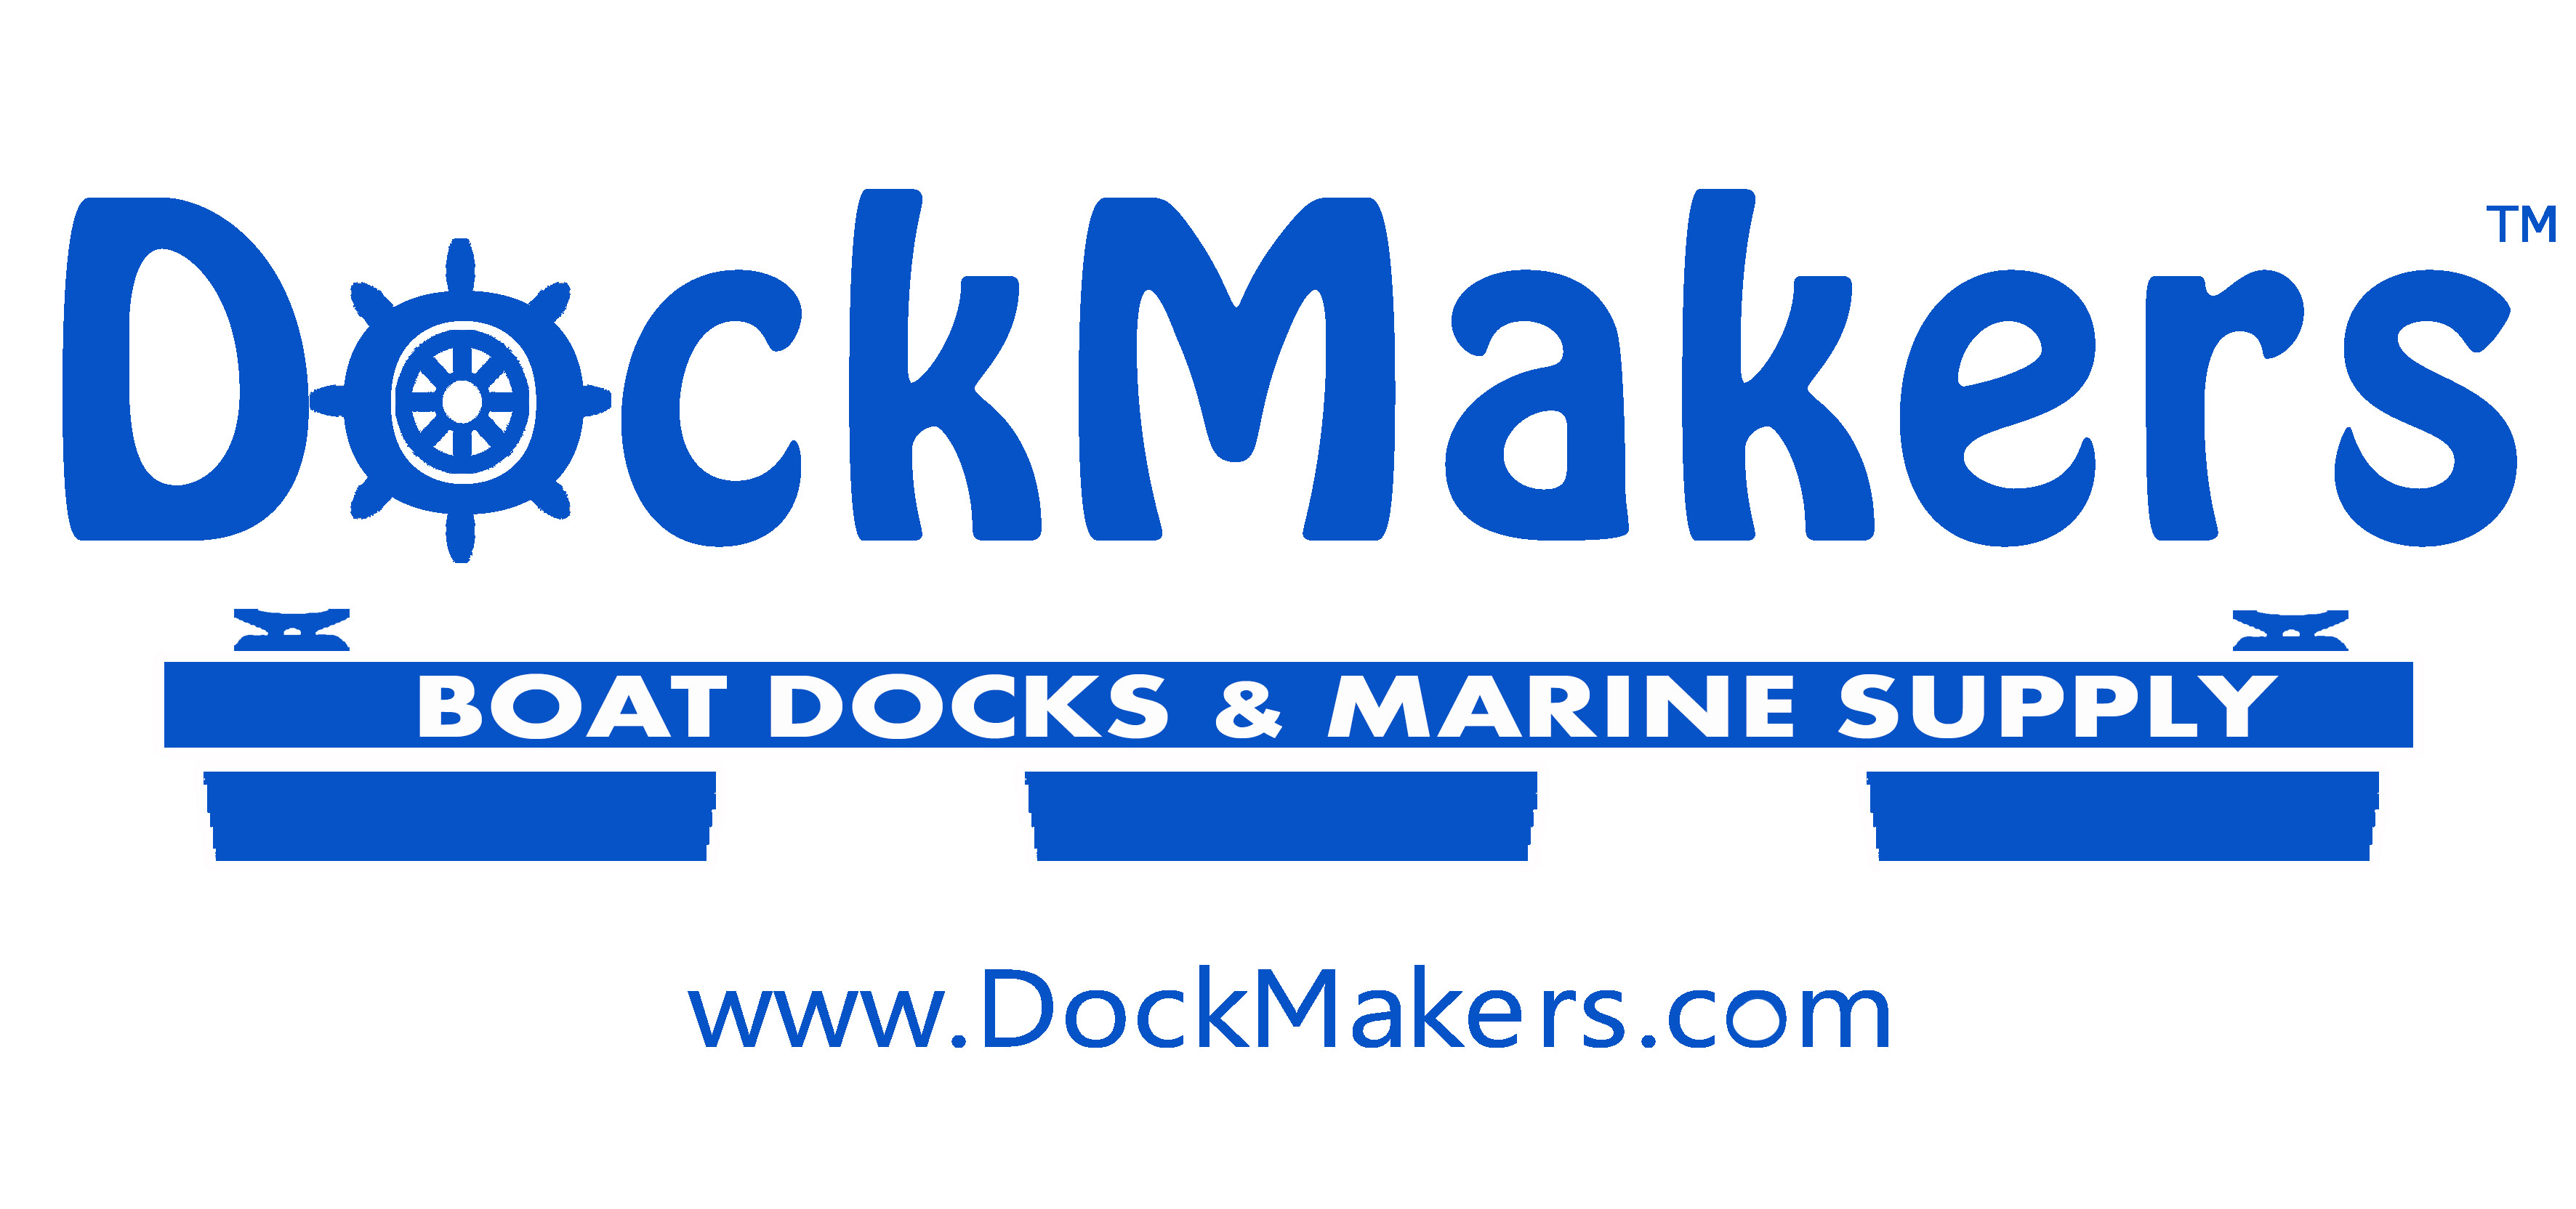 DockMakers docks for Marinas, Decks